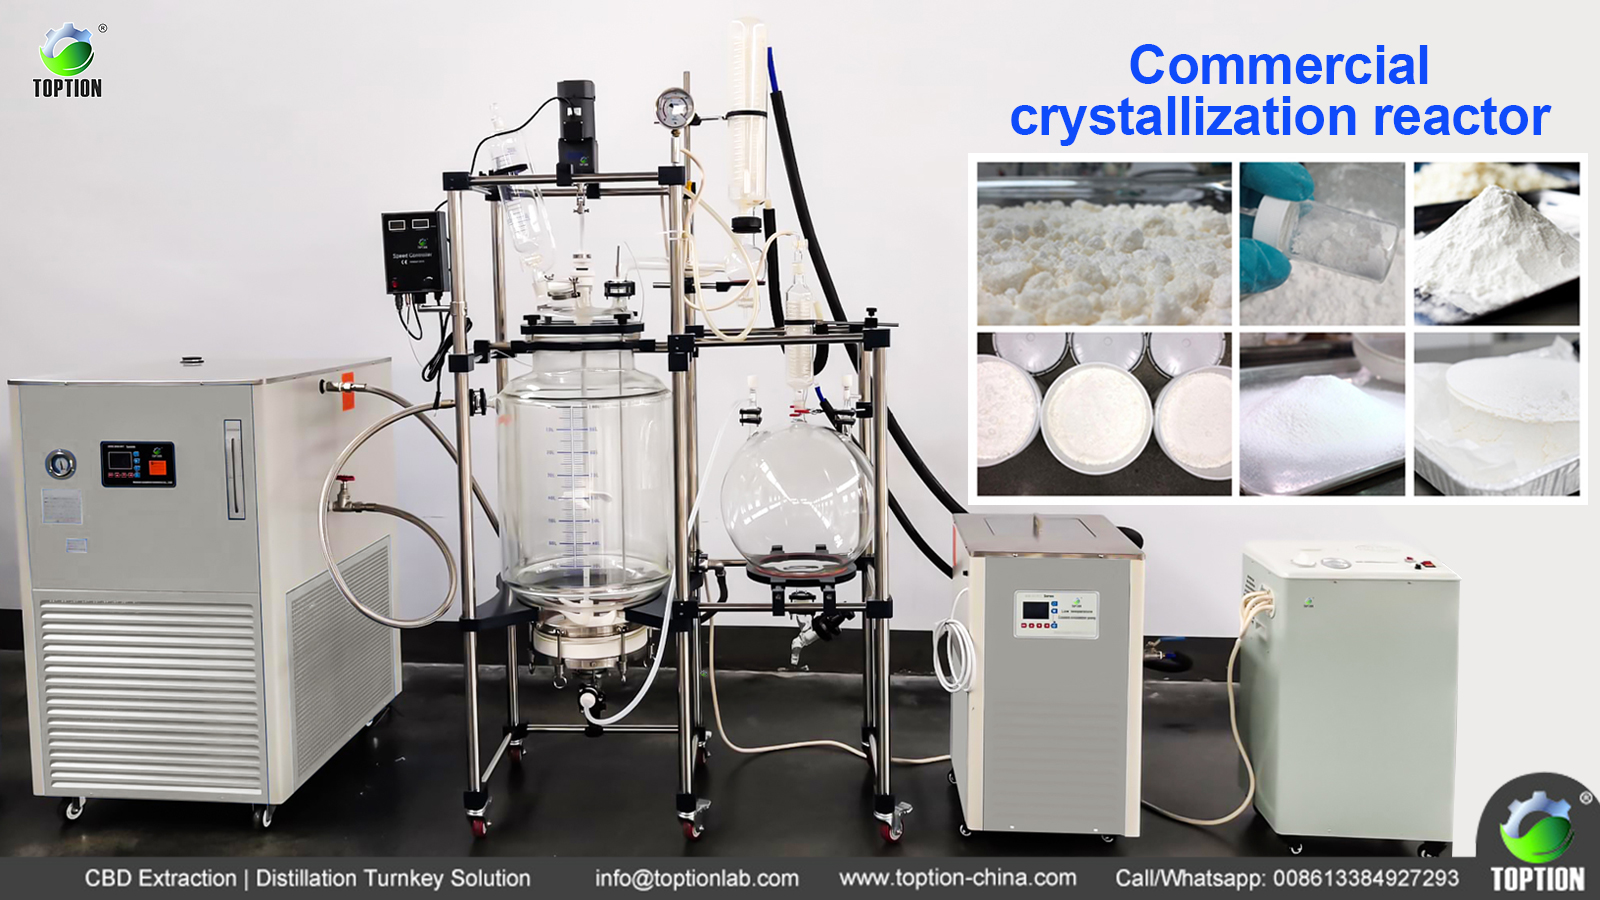 Crystallization reactor;